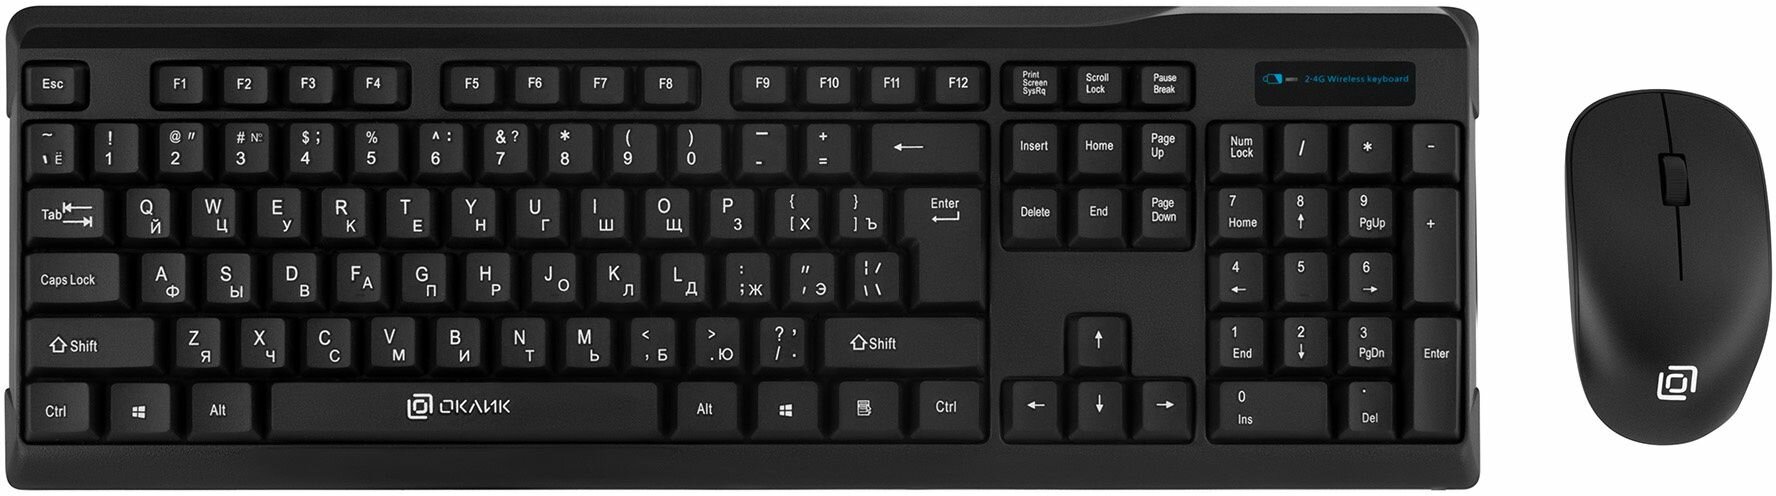 Клавиатура + мышь Оклик 230M клав: черный мышь: черный USB беспроводная (412900)